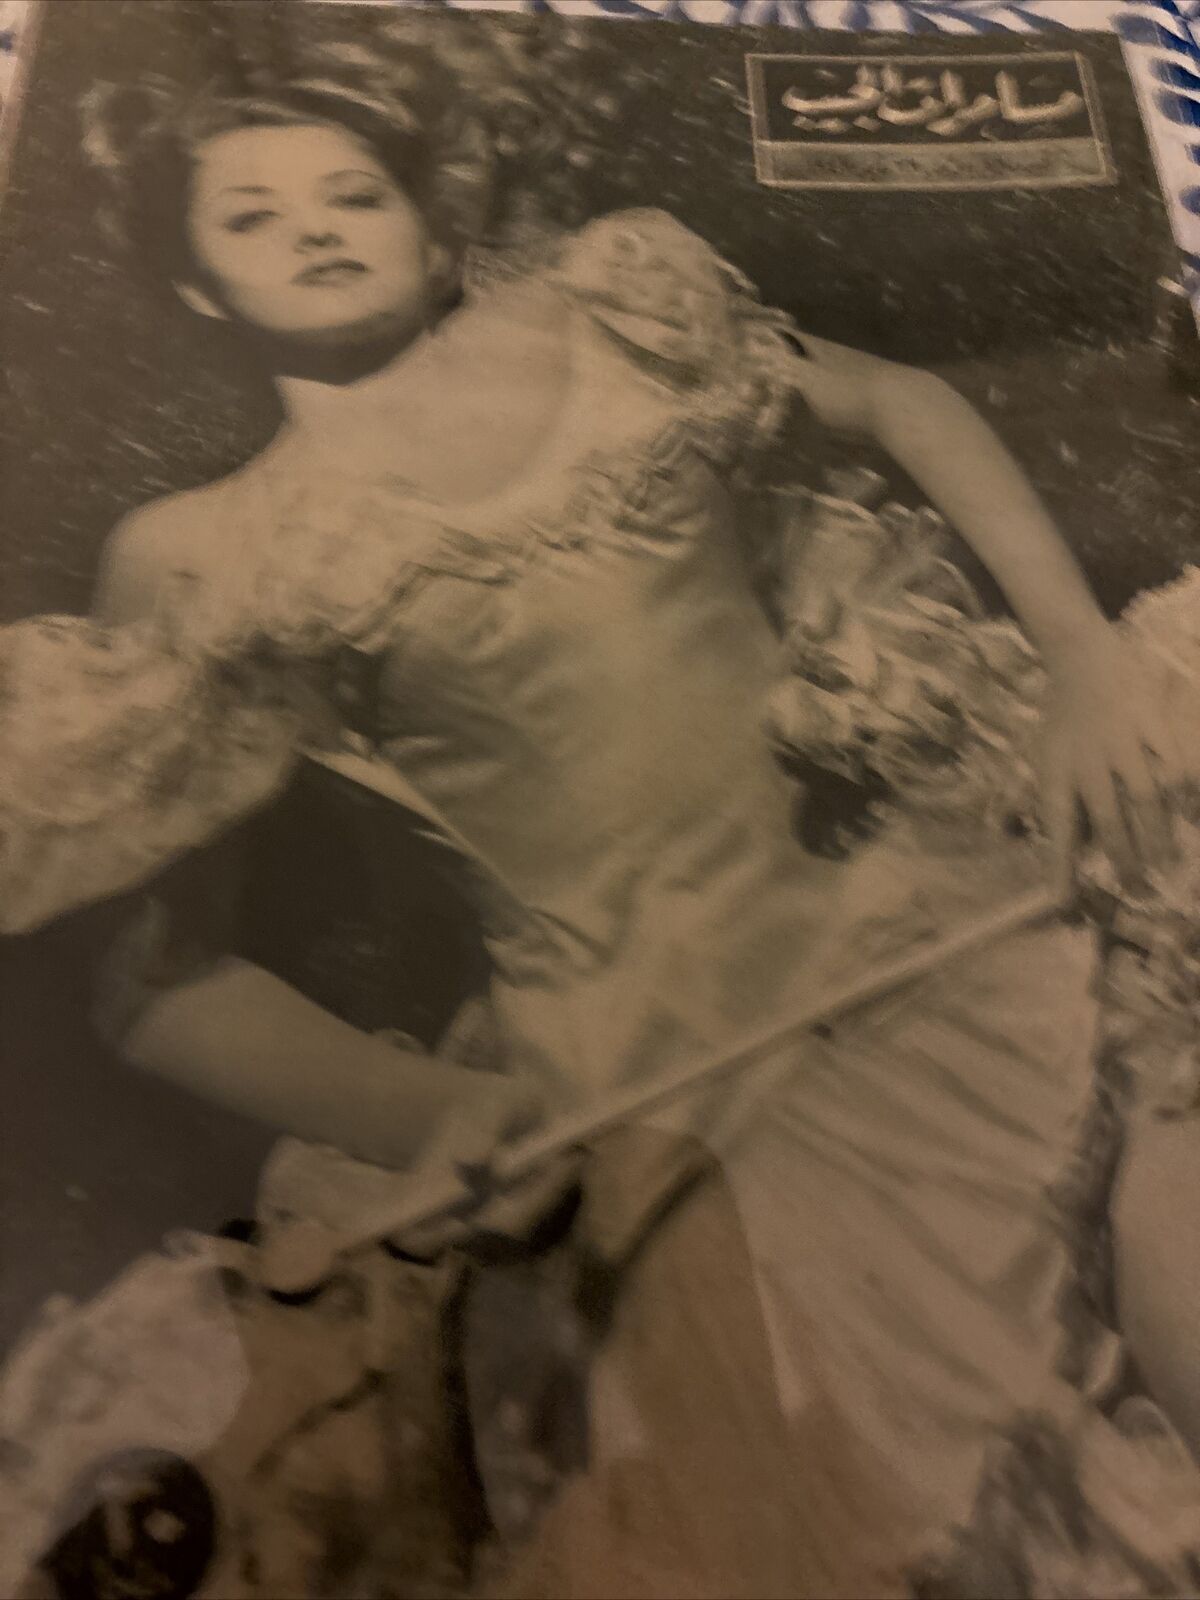 1946 Arabic Magazine Actress Martha Vickers Cover Scarce Hollywood